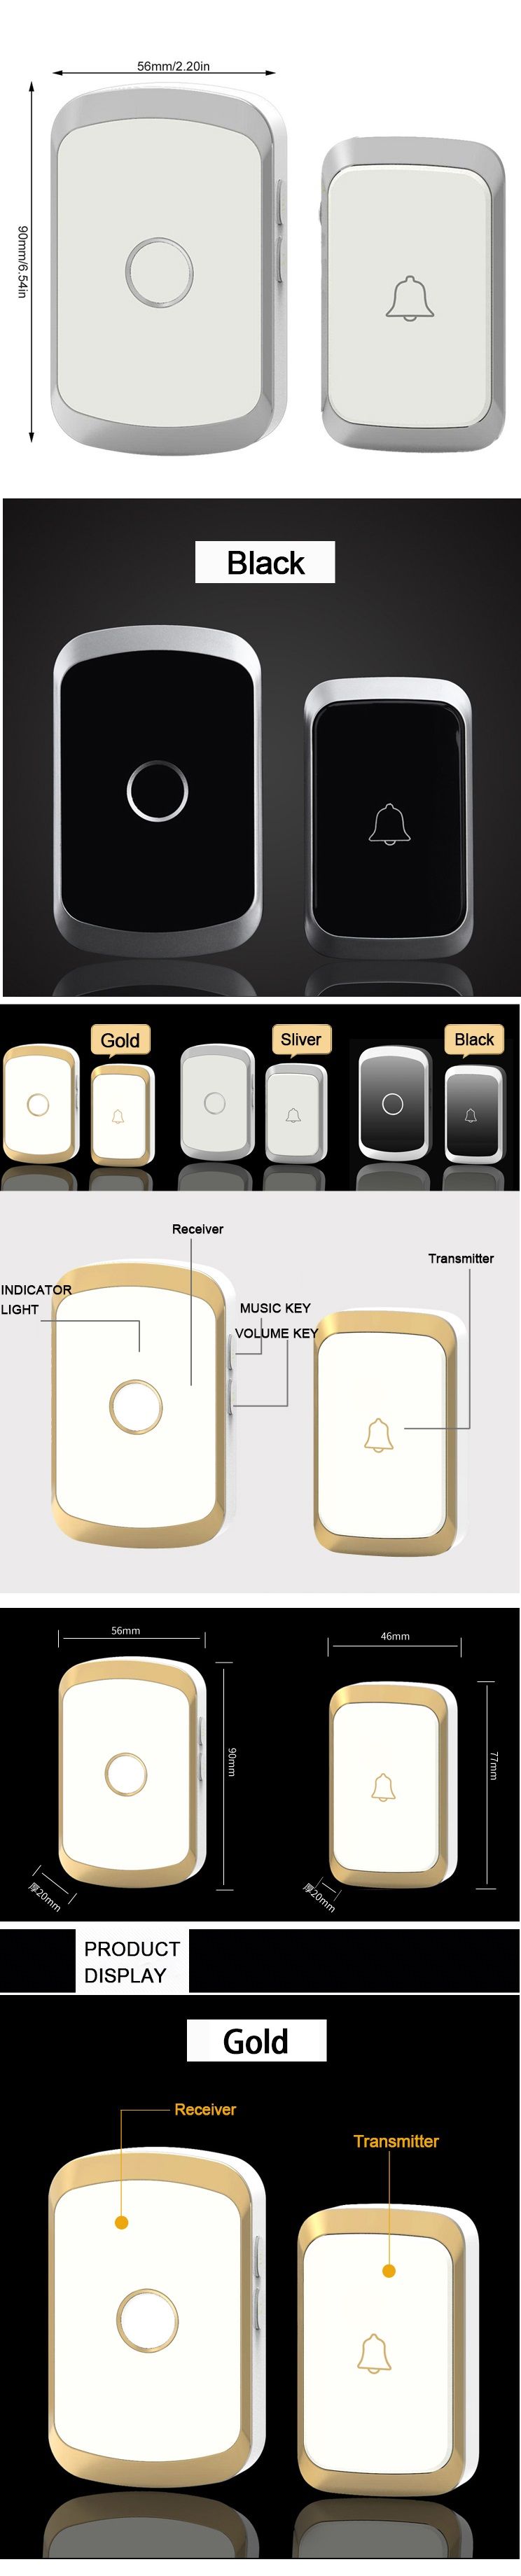 CACAZI-A20-Wireless-Music-Doorbell-Waterproof-AC-110-220V-300M-Remote-Door-Bell-1-Button-1-Receiver-1613725